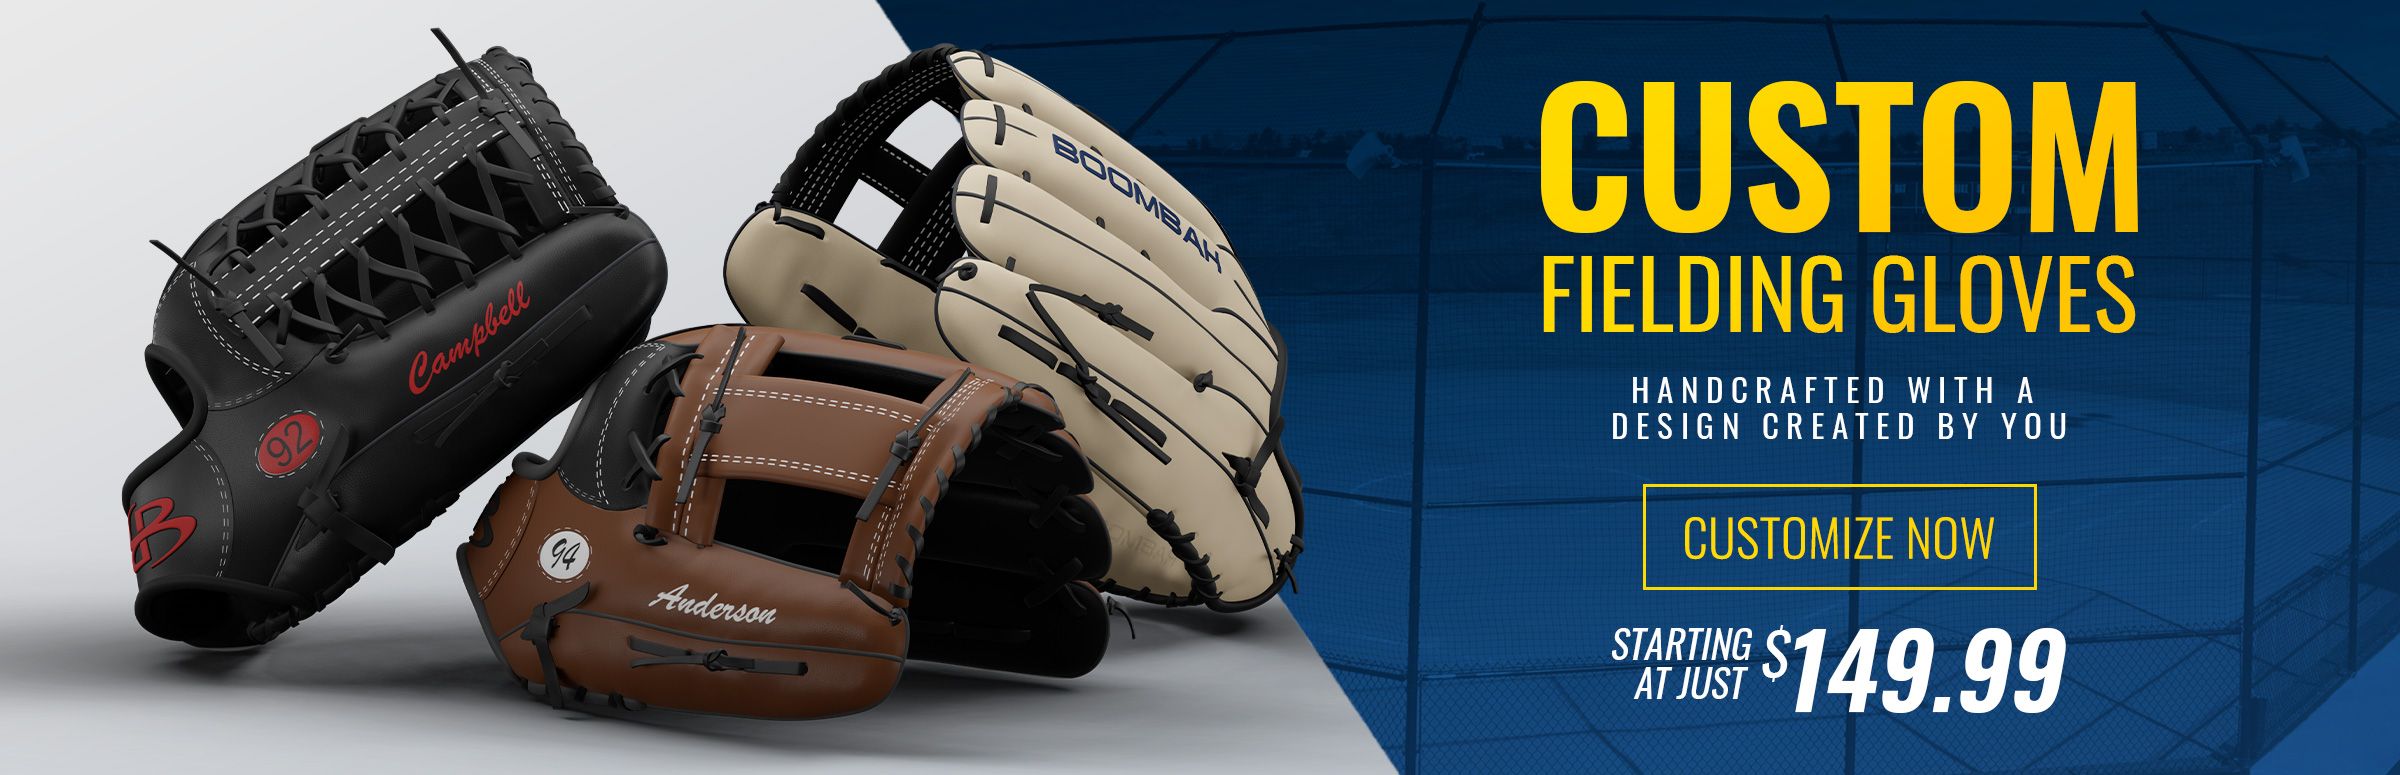 Custom Fielding Gloves Now Available